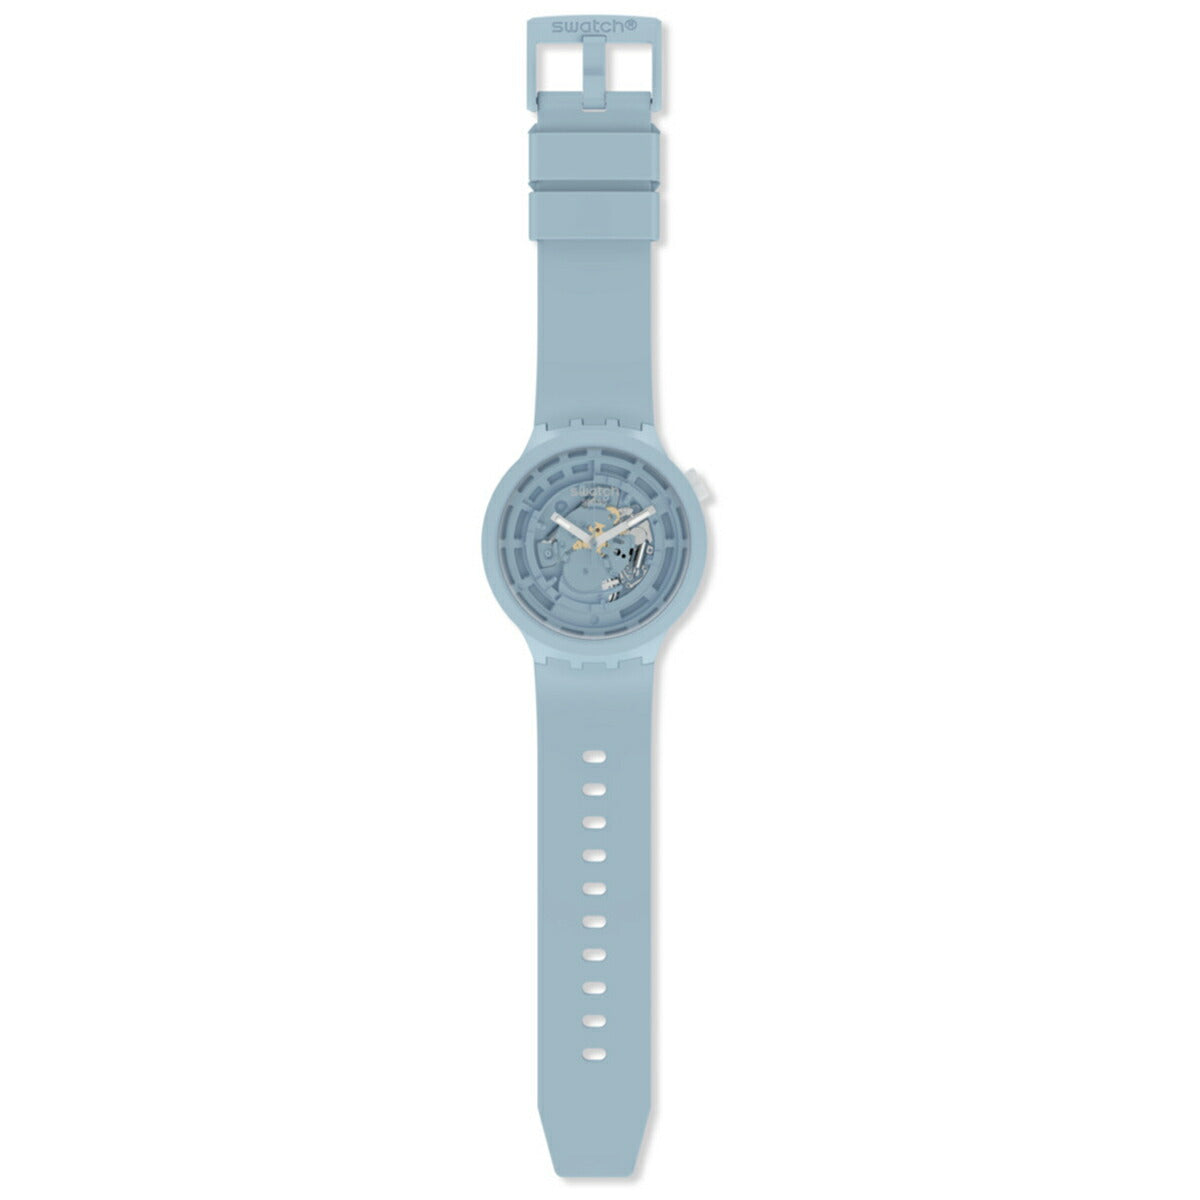 swatch スウォッチ 腕時計 メンズ レディース オリジナルズ ビッグボールド バイオセラミック C-BLUE BIG BOLD BIOCERAMIC SB03N100